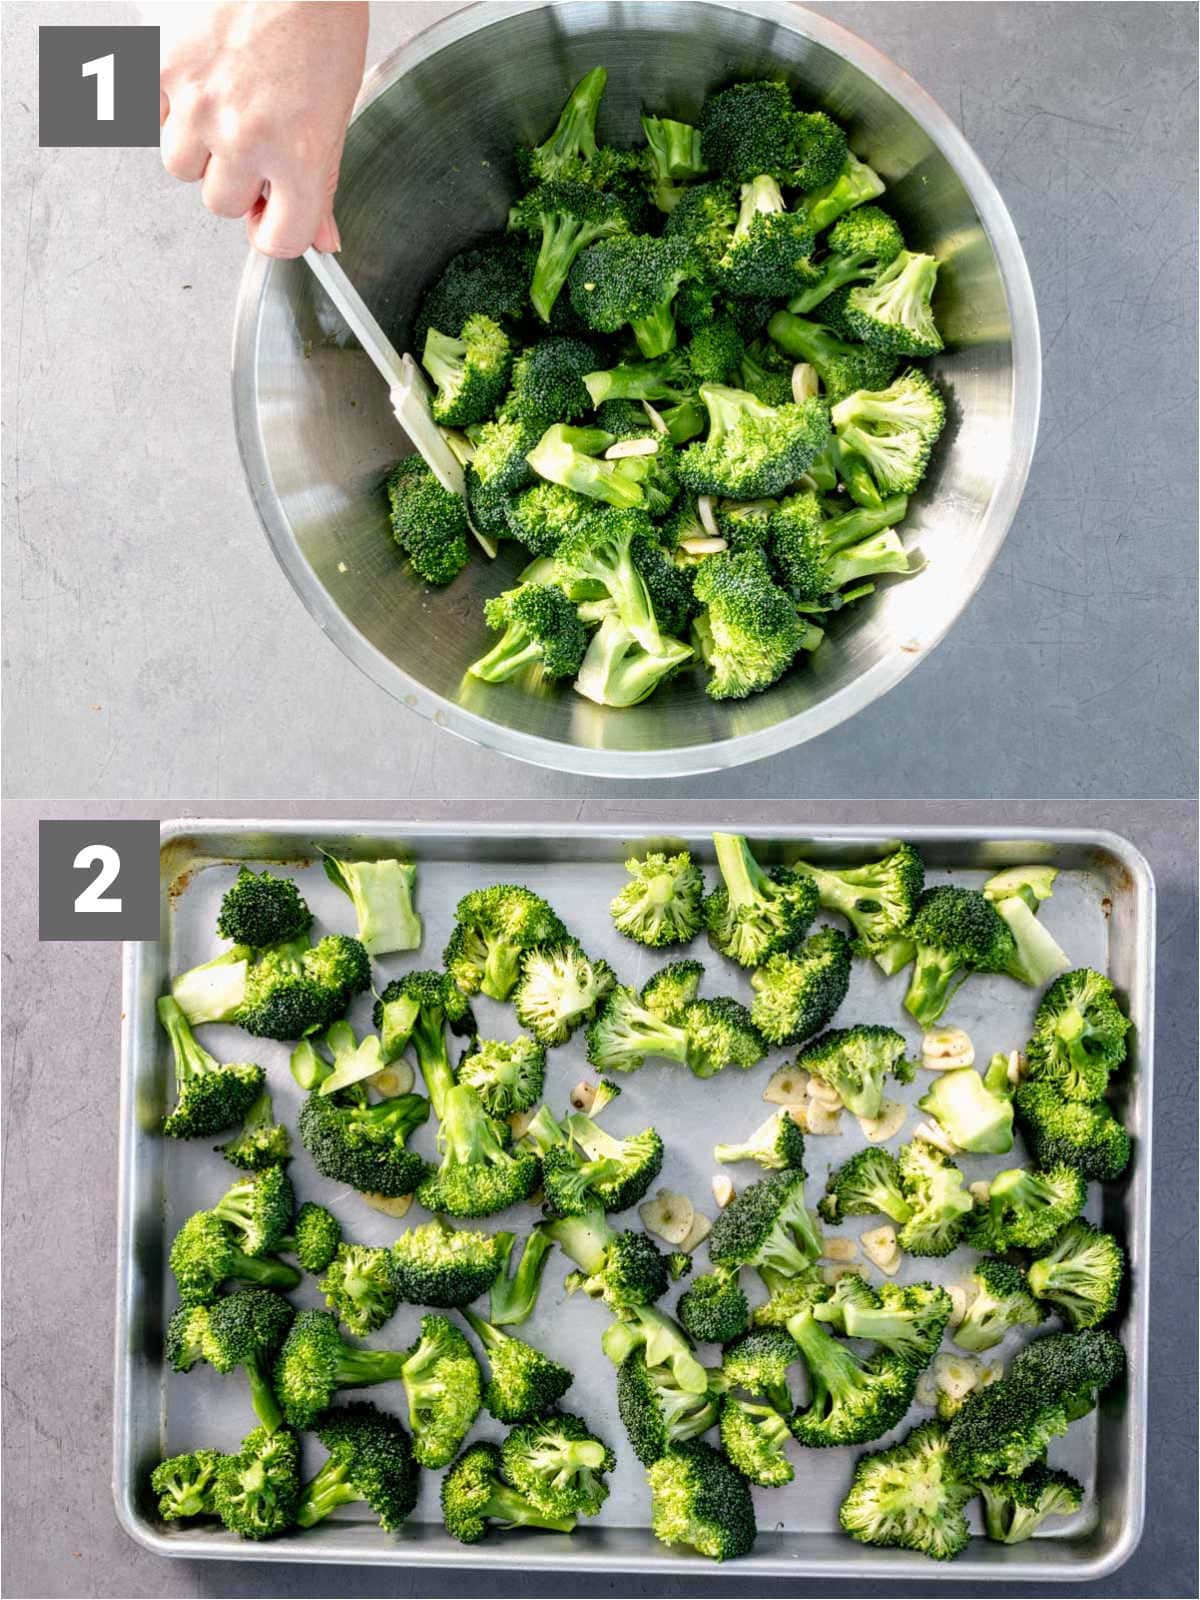 roasted broccoli steps 1 and 2